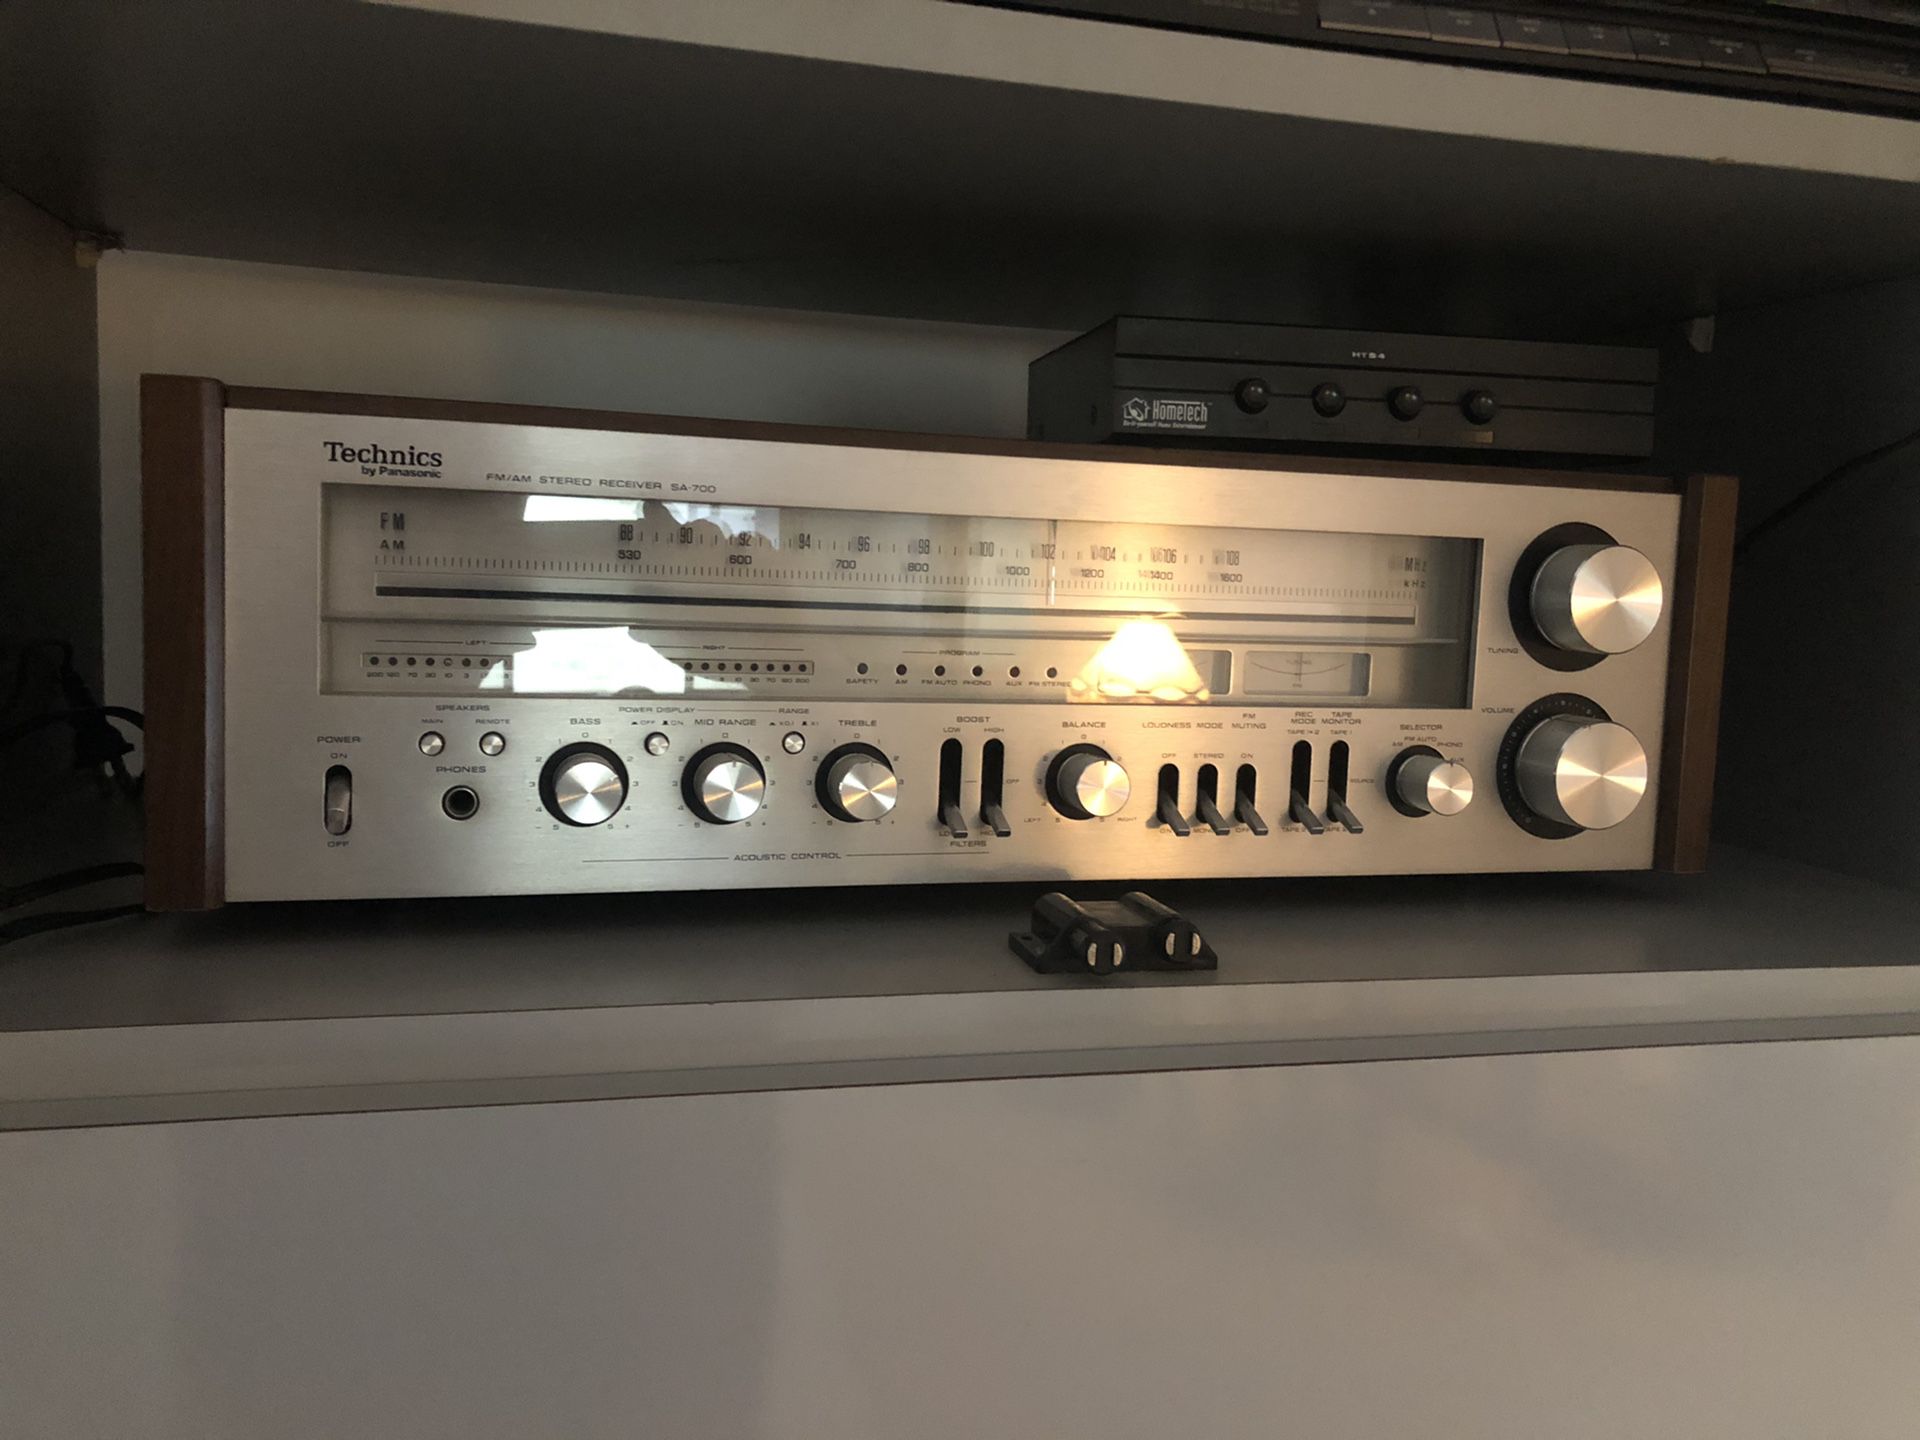 Technics SA 700 stereo receiver